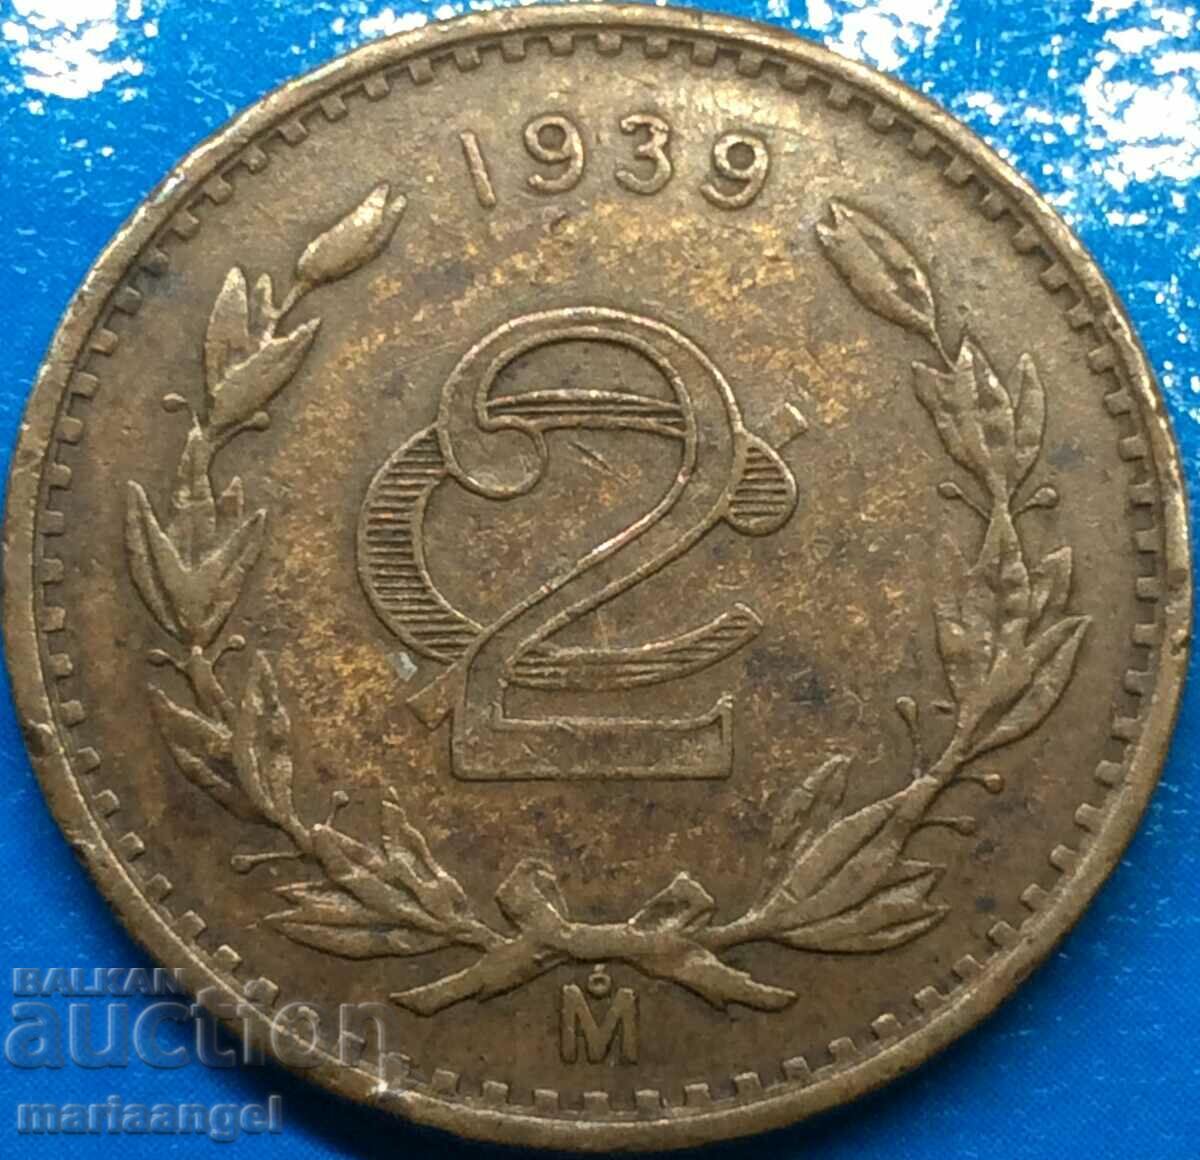 Mexico 1939 2 centavos bronze